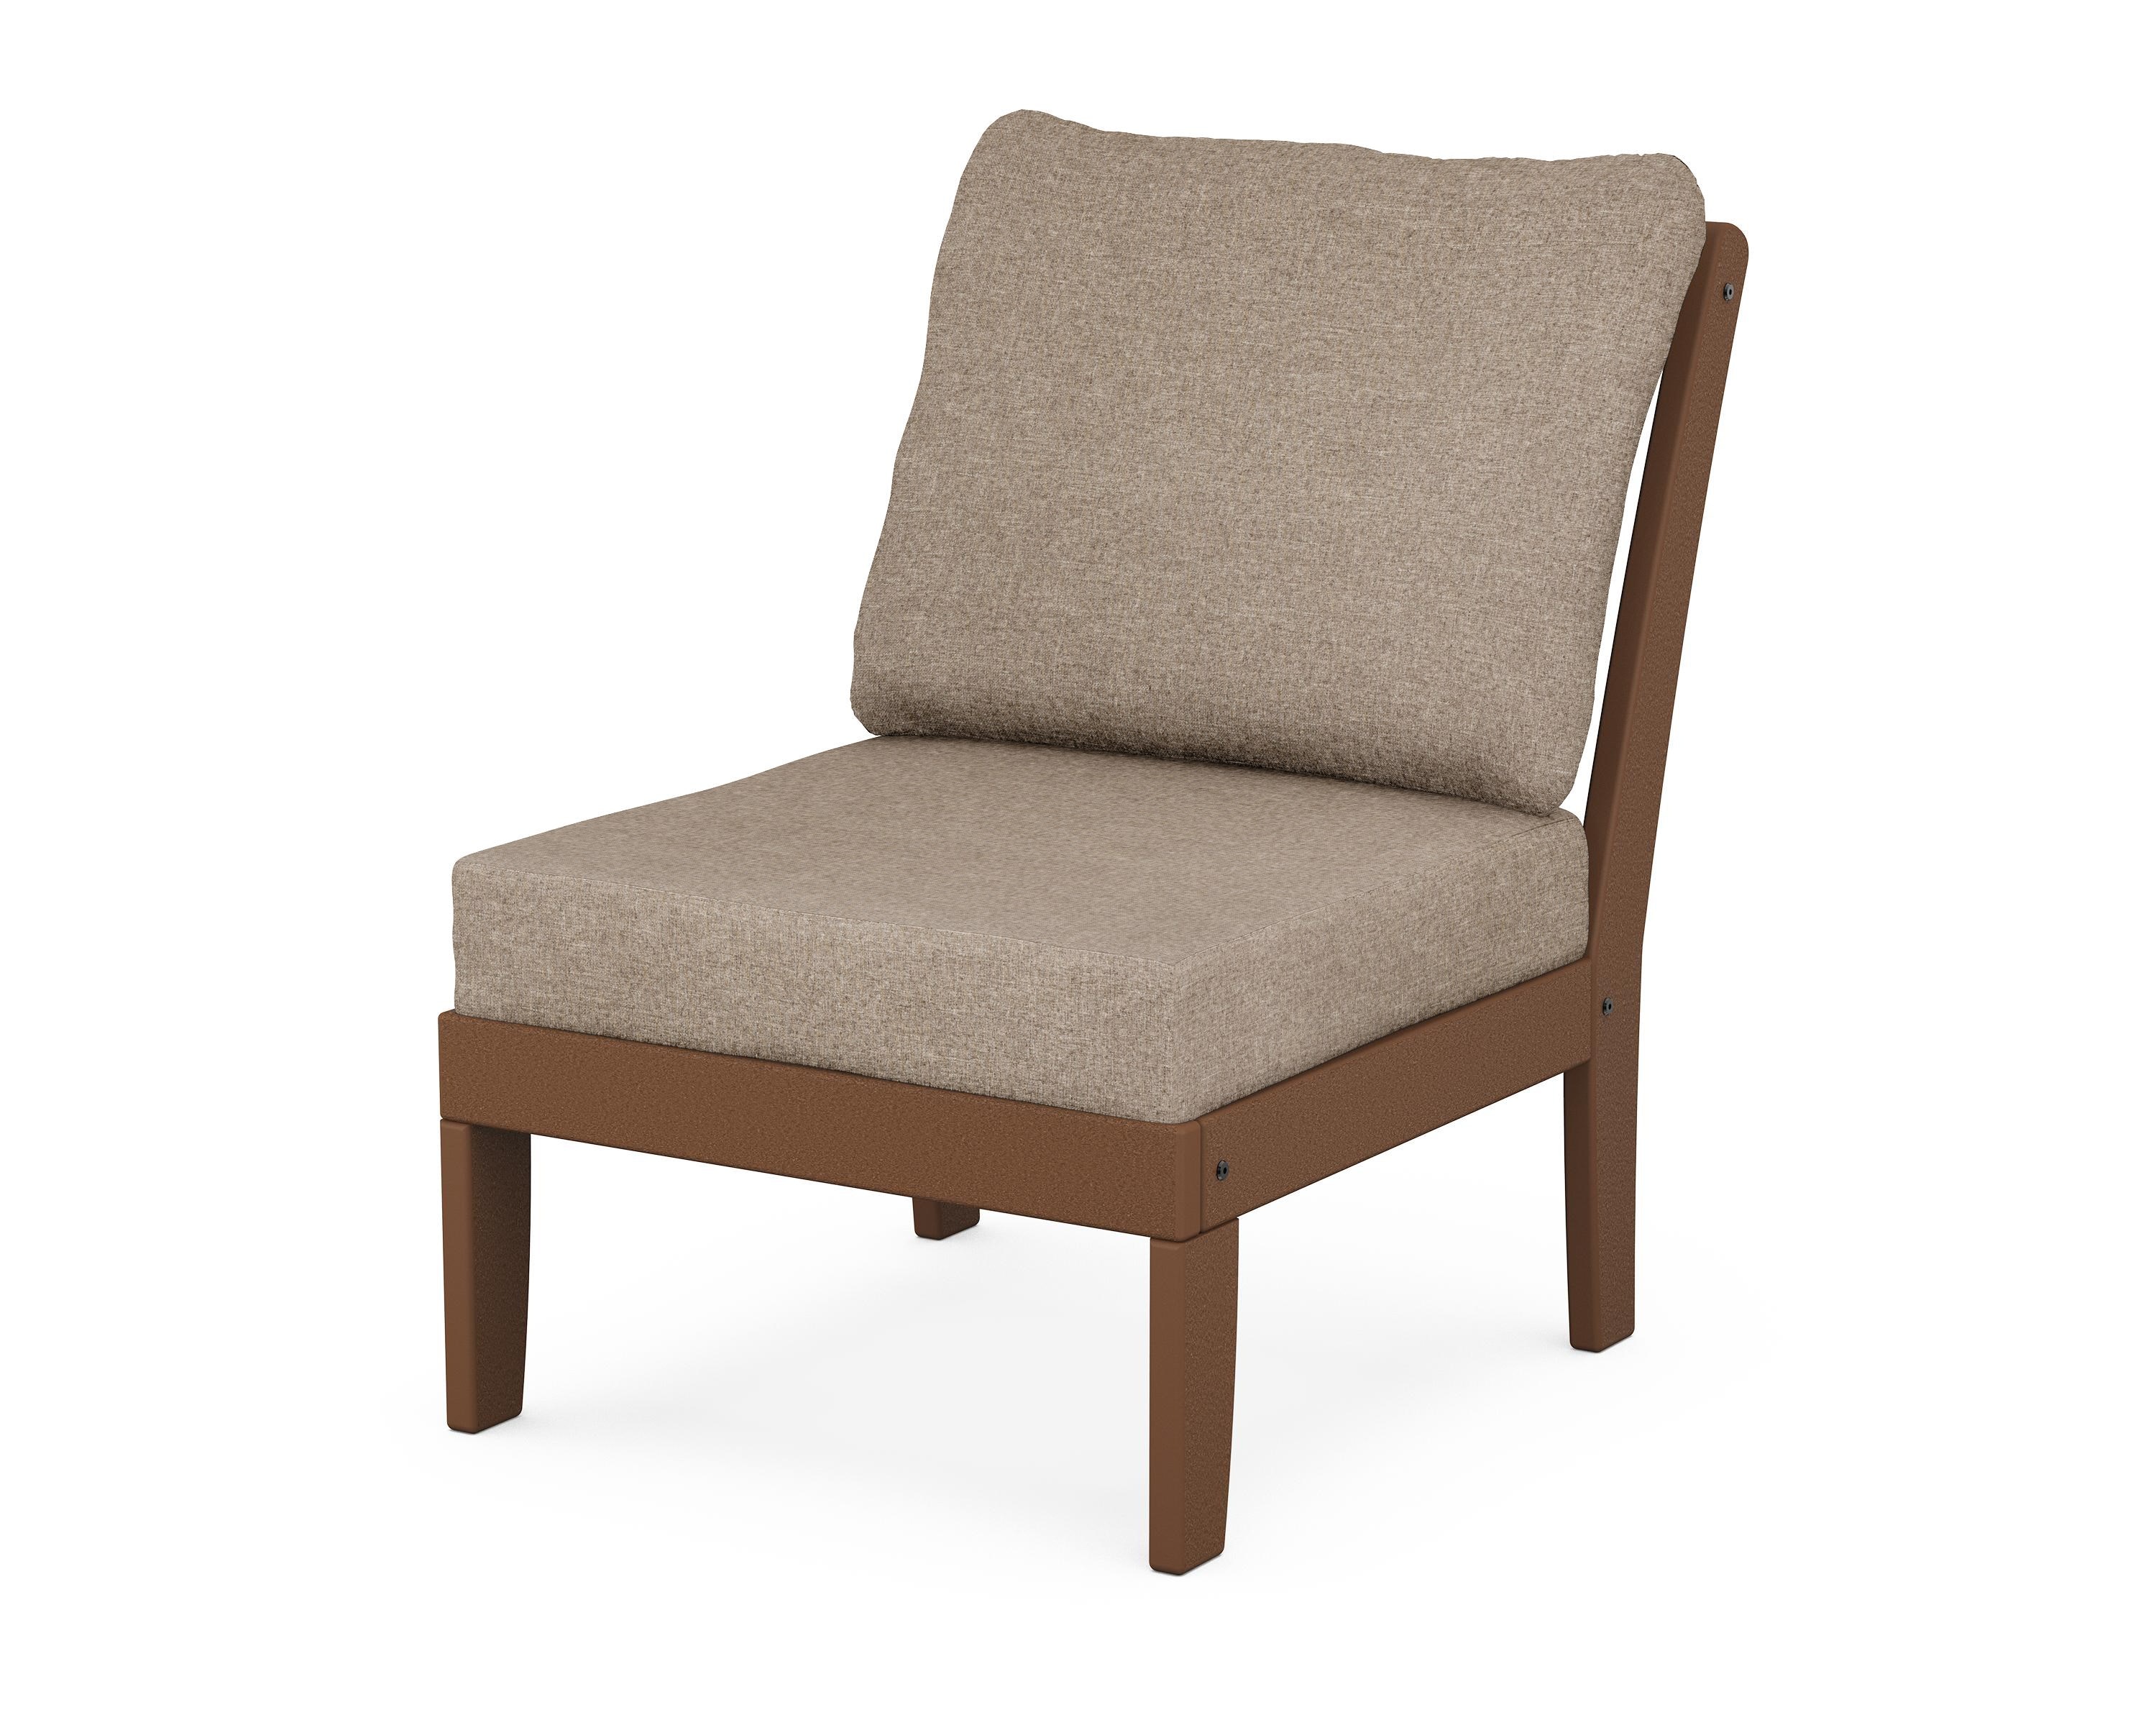 Trex Outdoor Furniture Yacht Club Modular Armless Chair